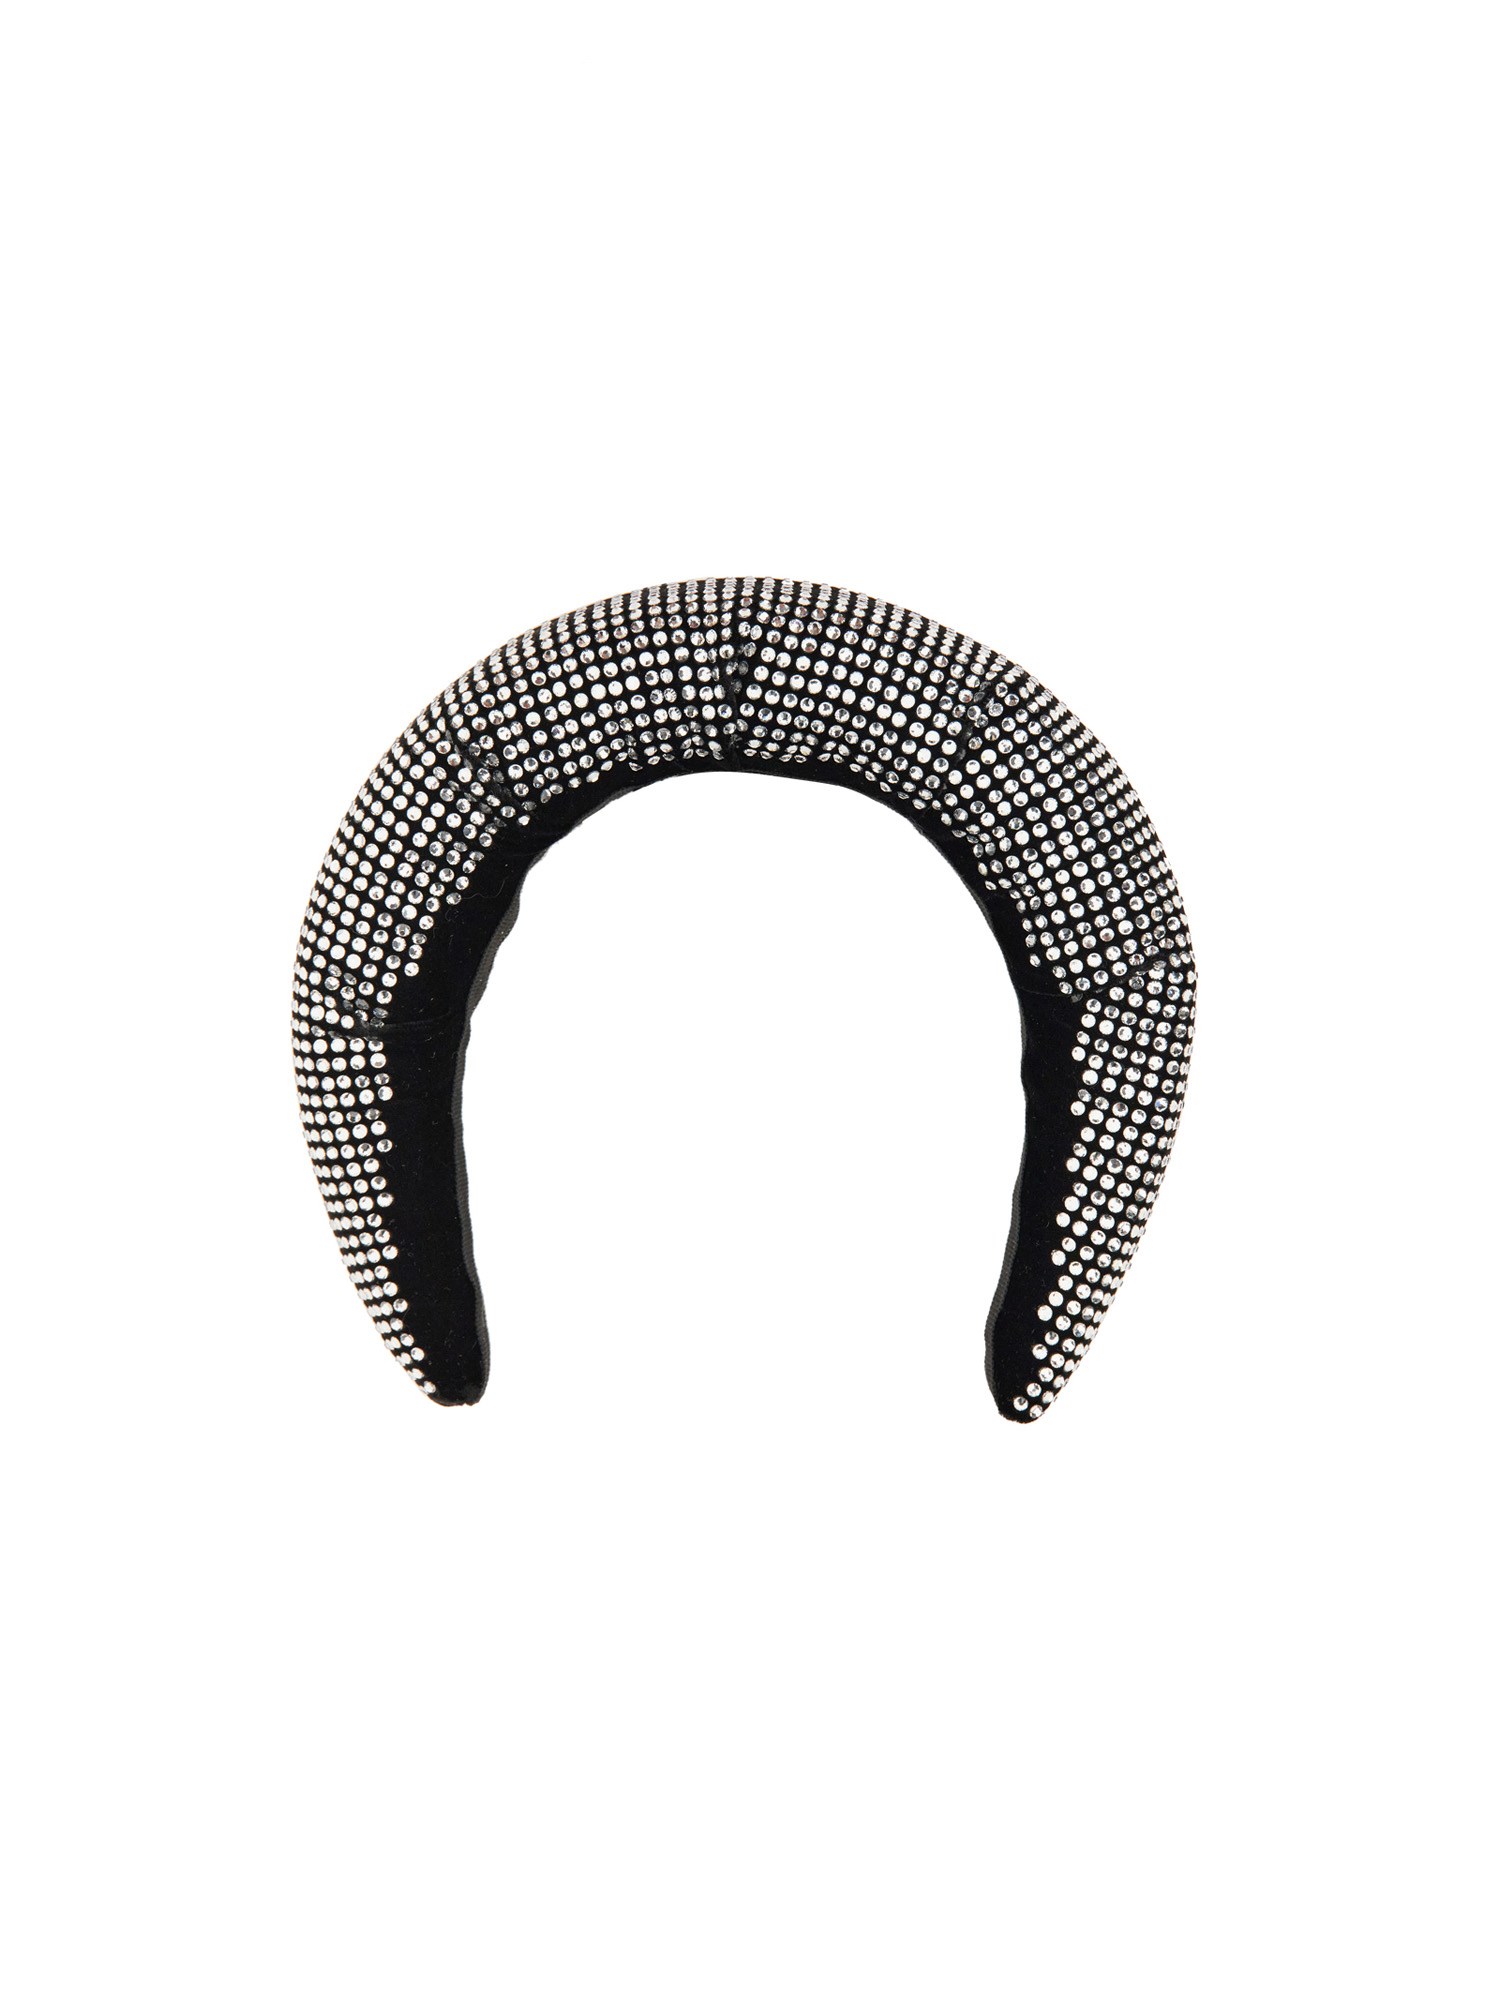 nina ricci headband with rhinestones